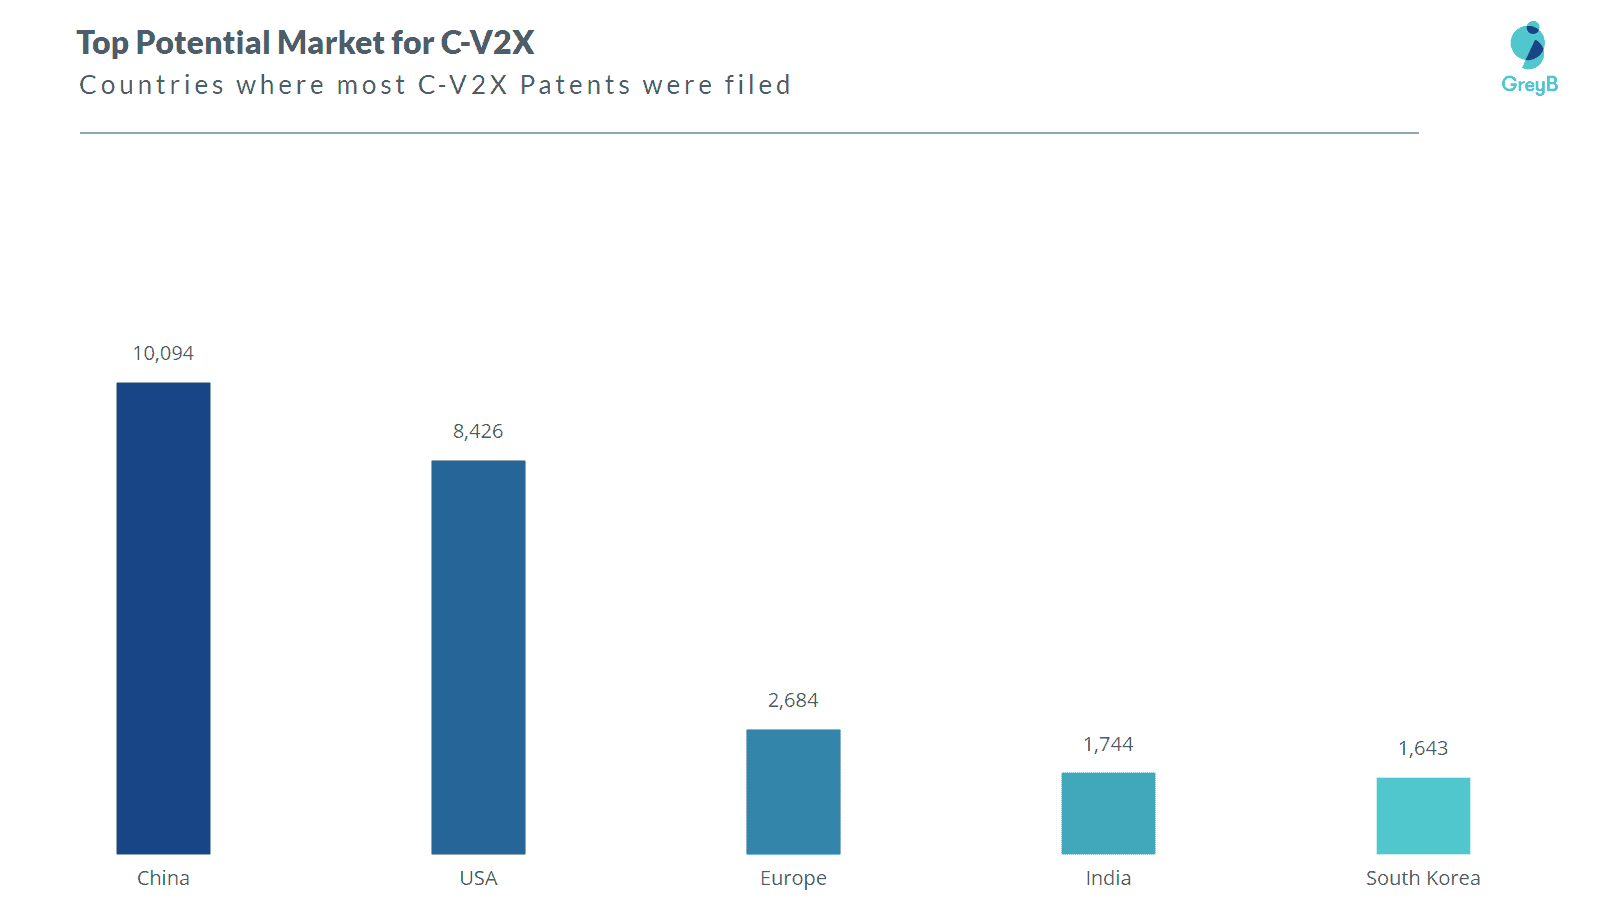 Top Potential Markets for CV2X